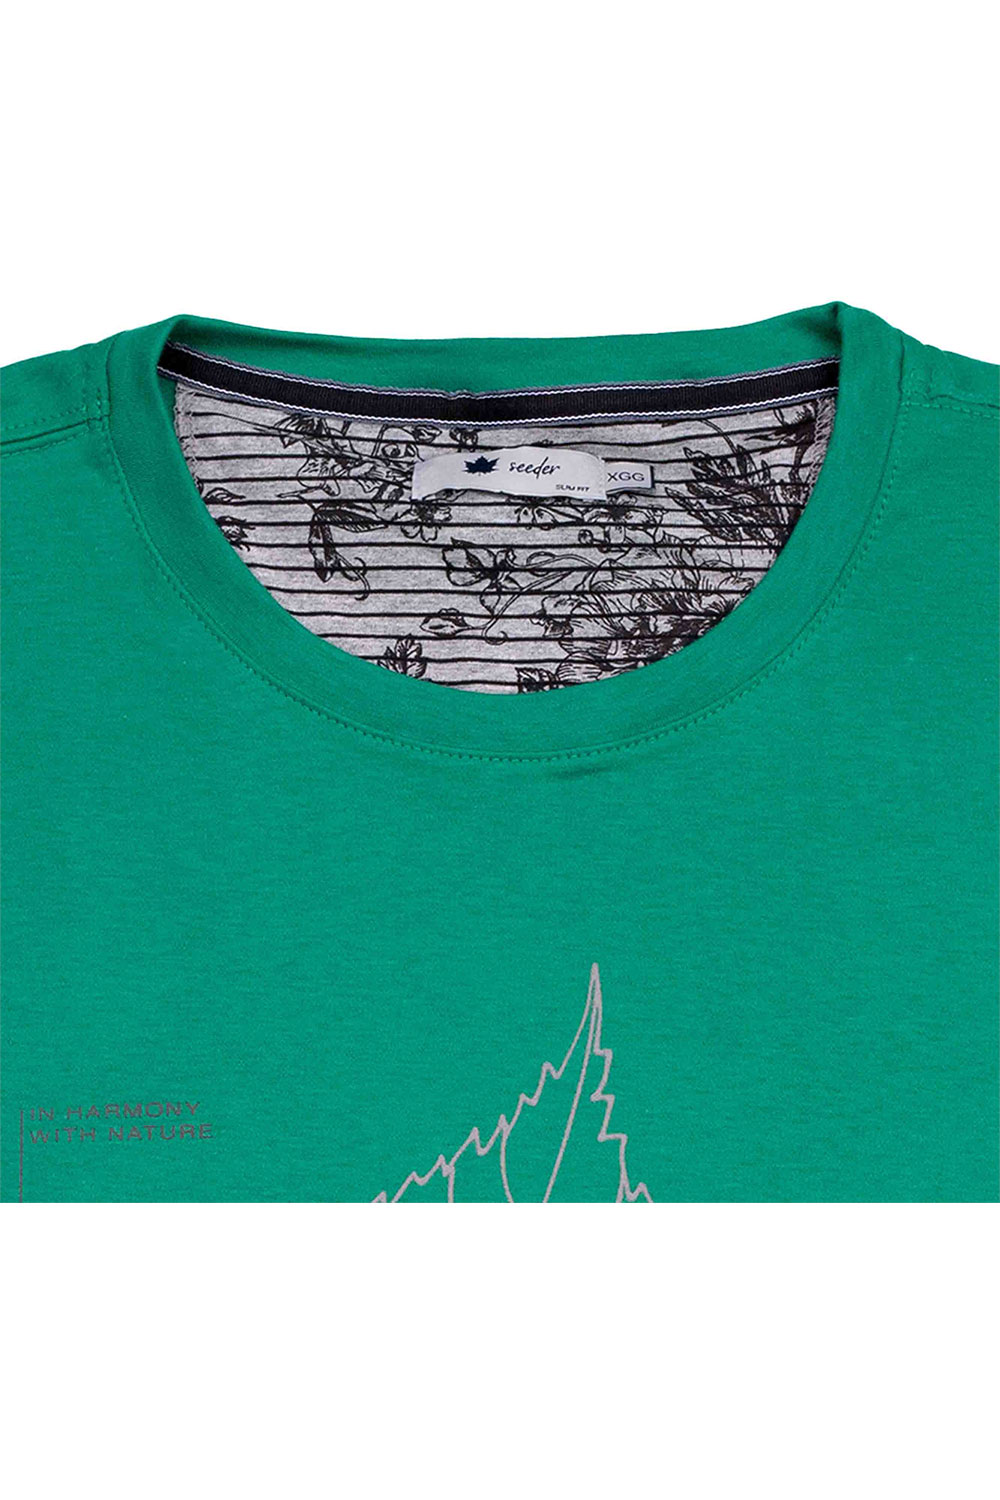 camiseta masculina clorofila meia malha suedine seeder modelo se0301143 vd0039